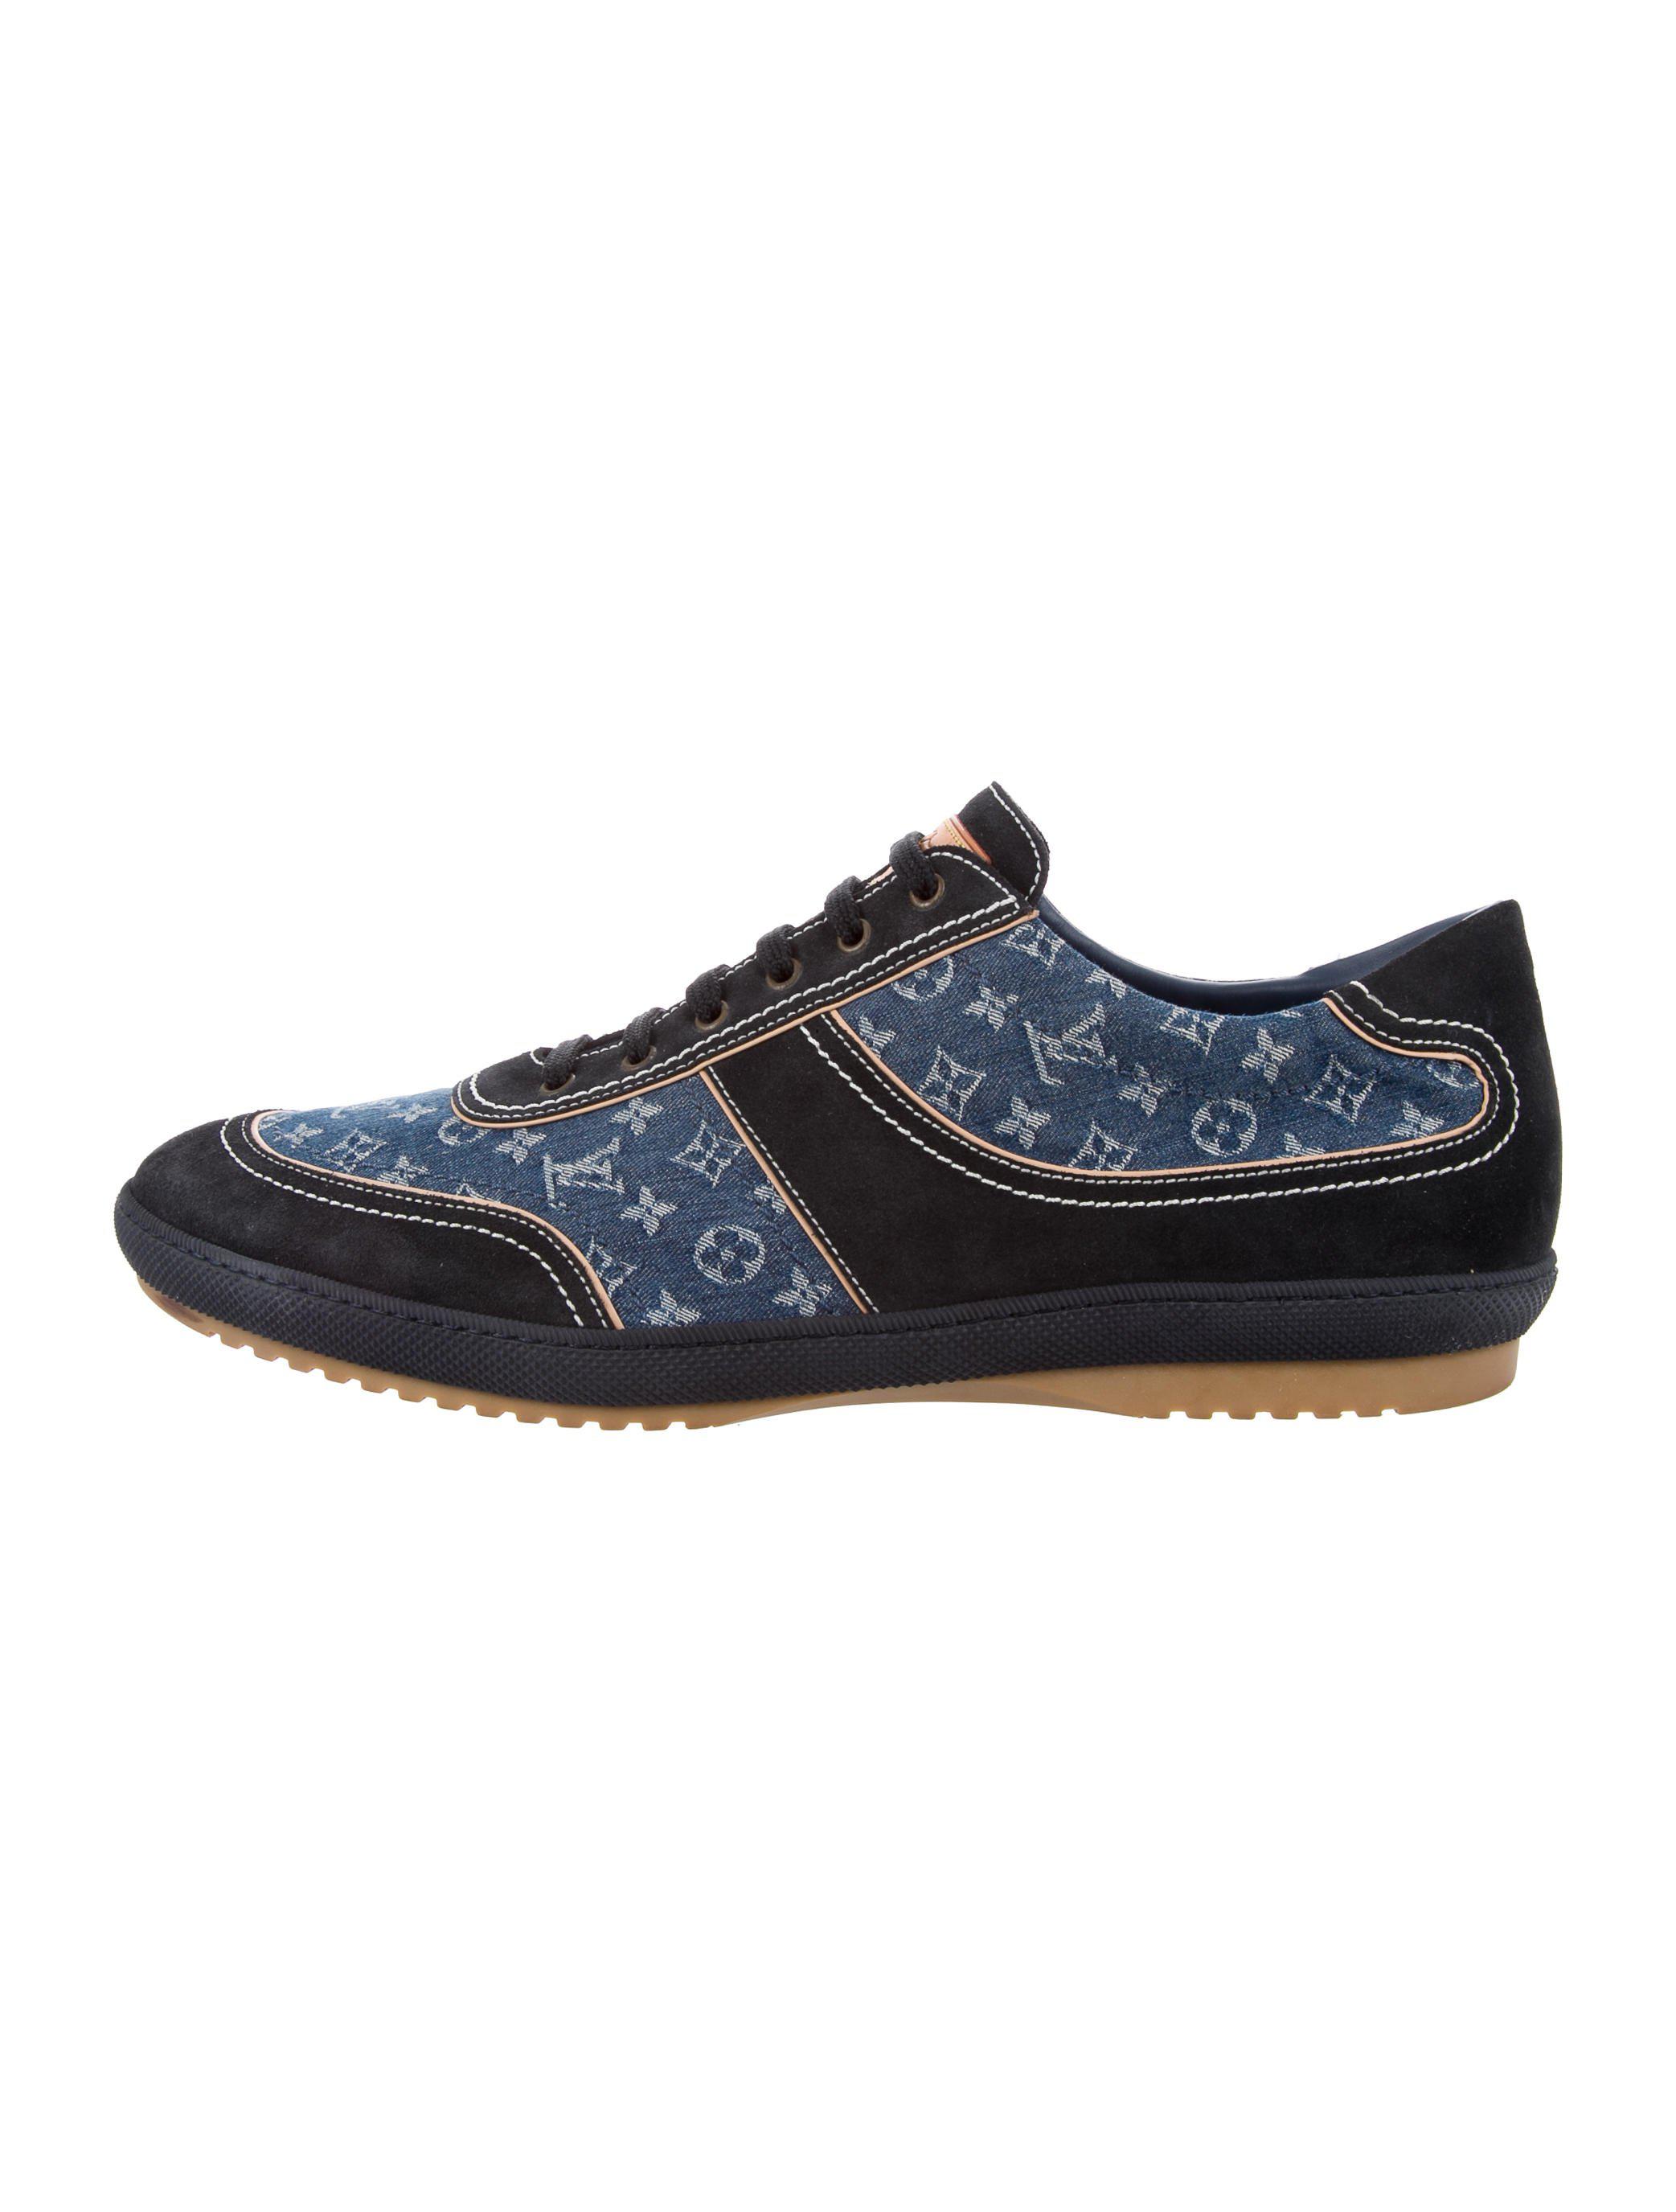 Lyst - Louis Vuitton Monogram Denim Sneakers in Blue for Men